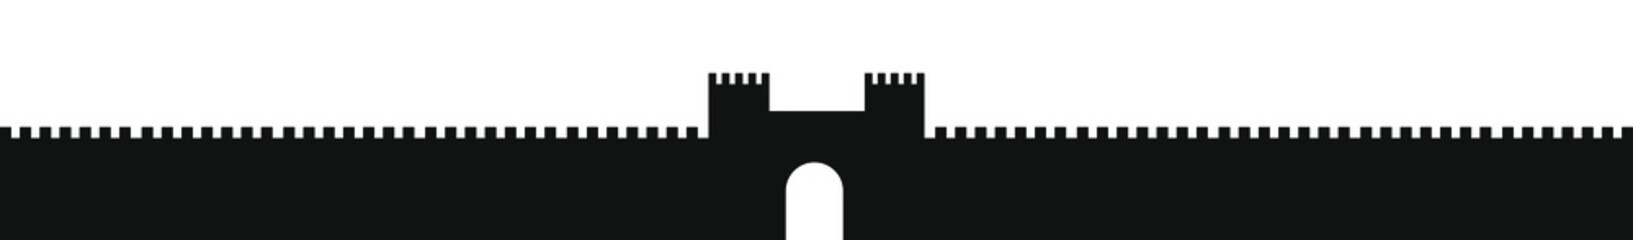 Castle silhouette vector. Wide silhouette of a castle